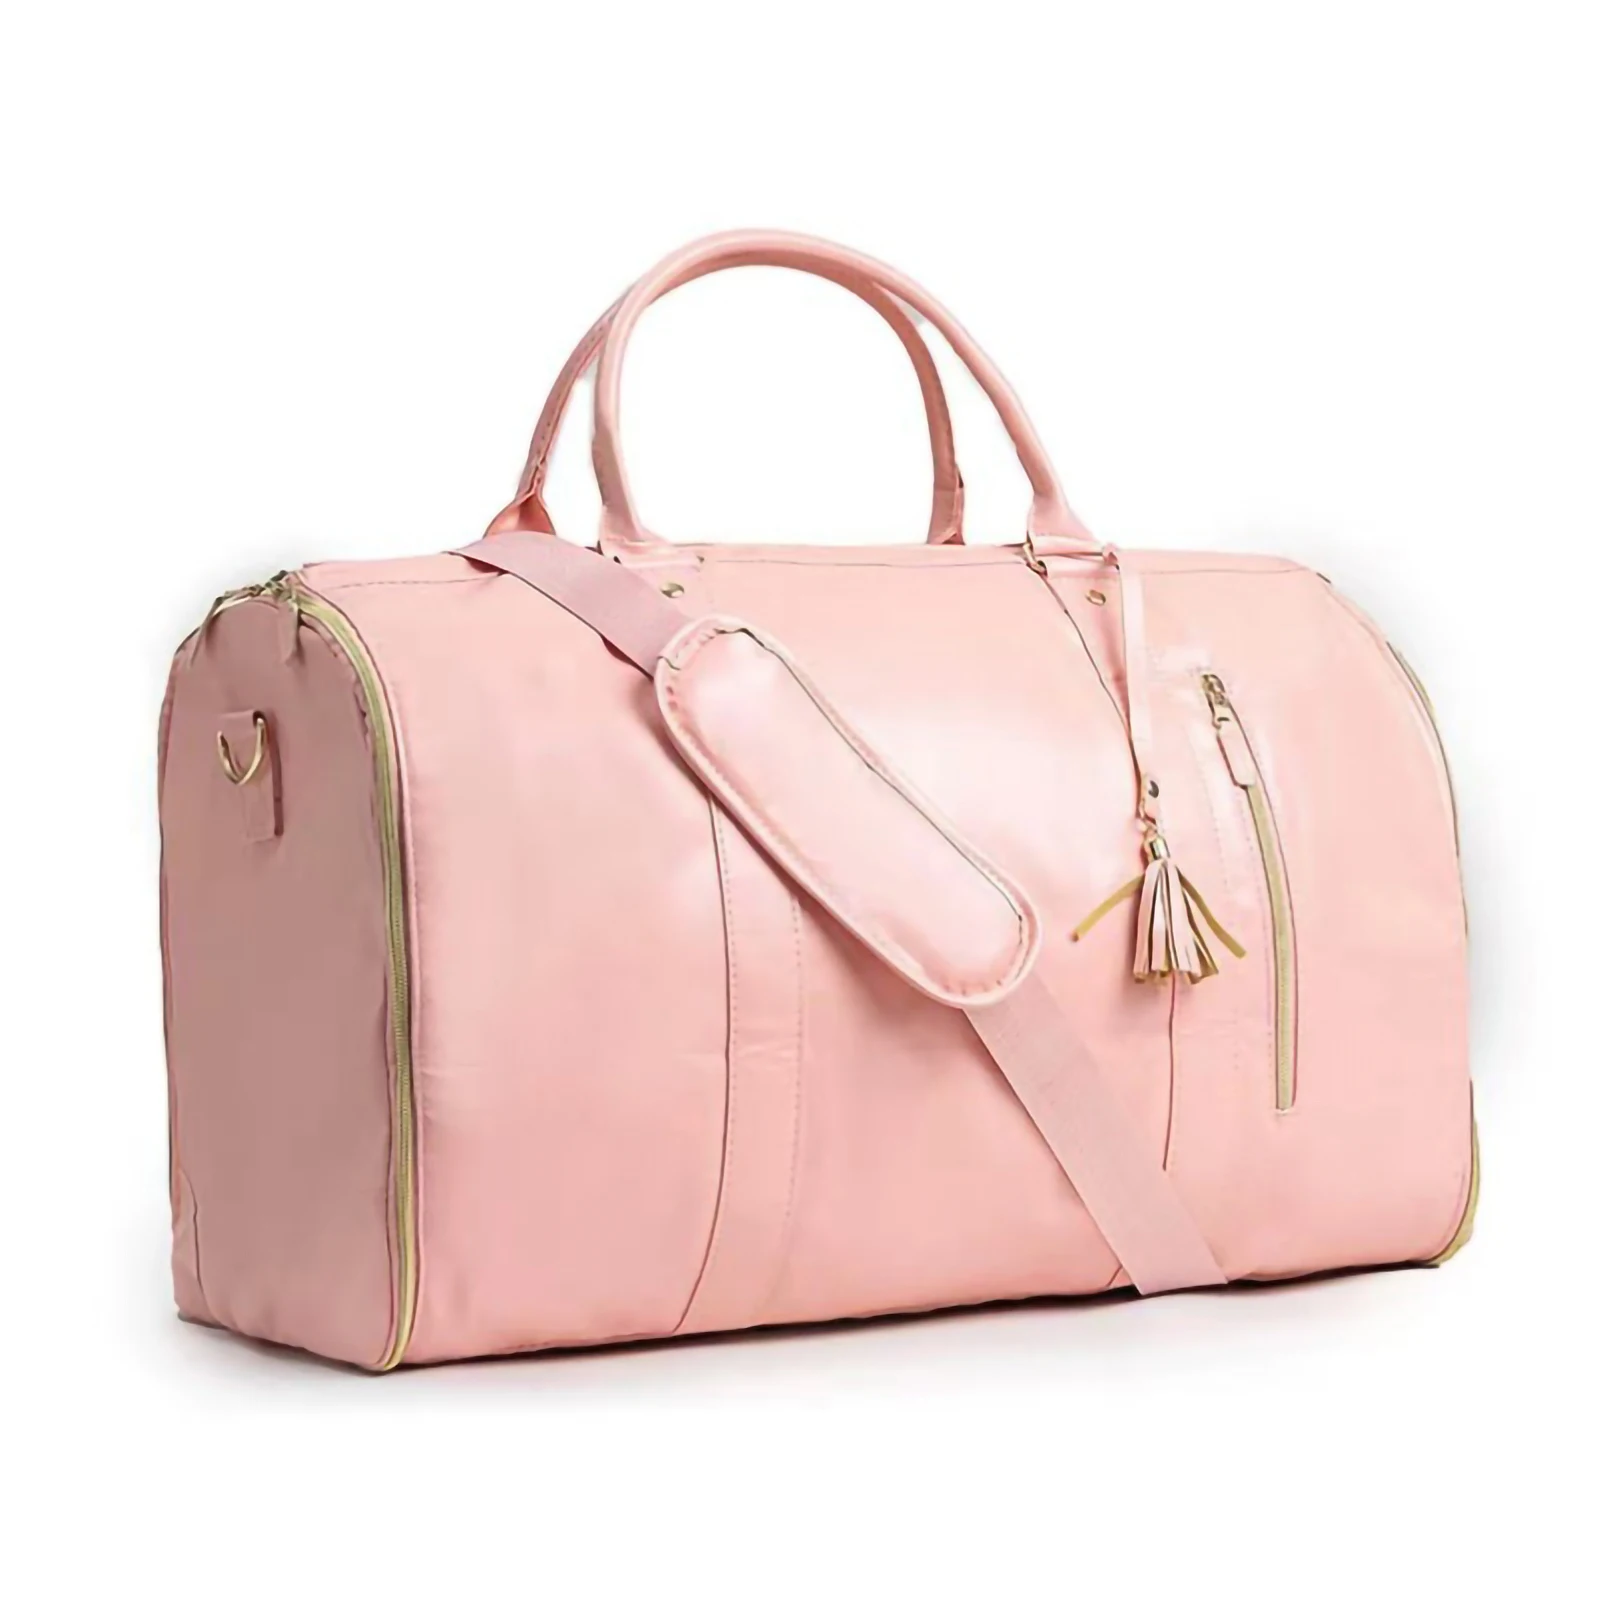 Aunomay's Luxury Travel Bag